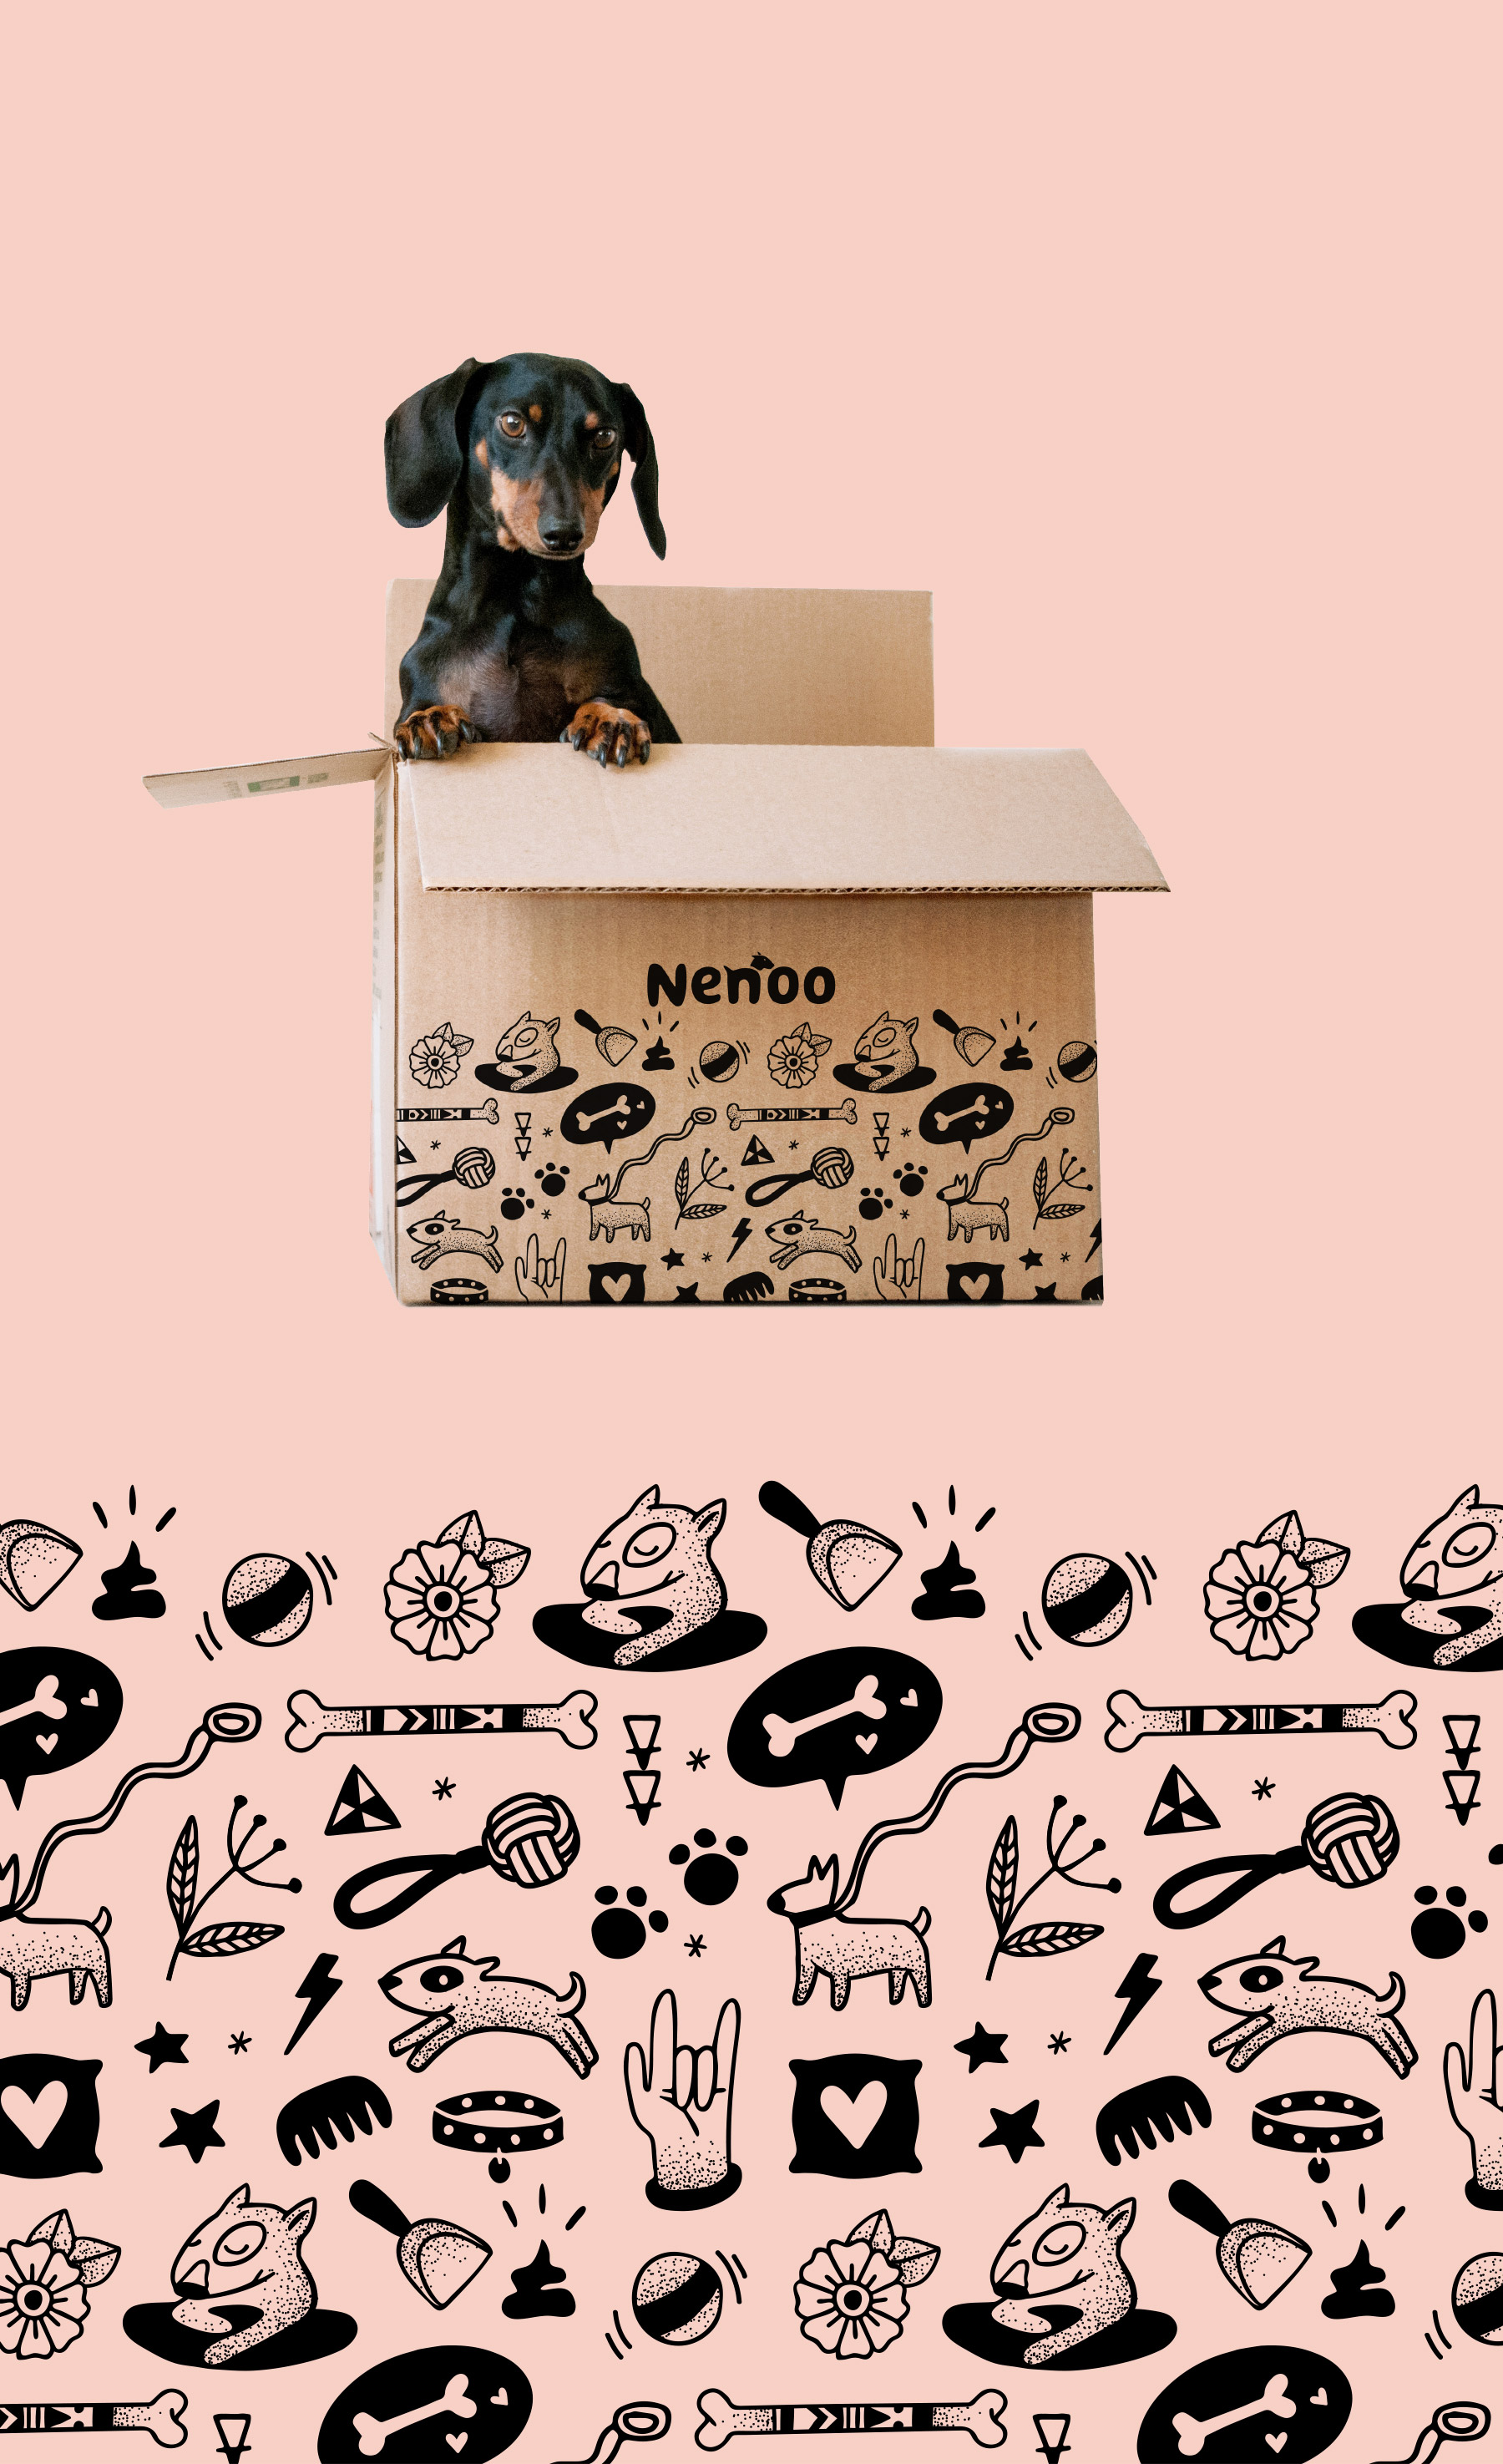 Dog inside shipping box with fun pattern design